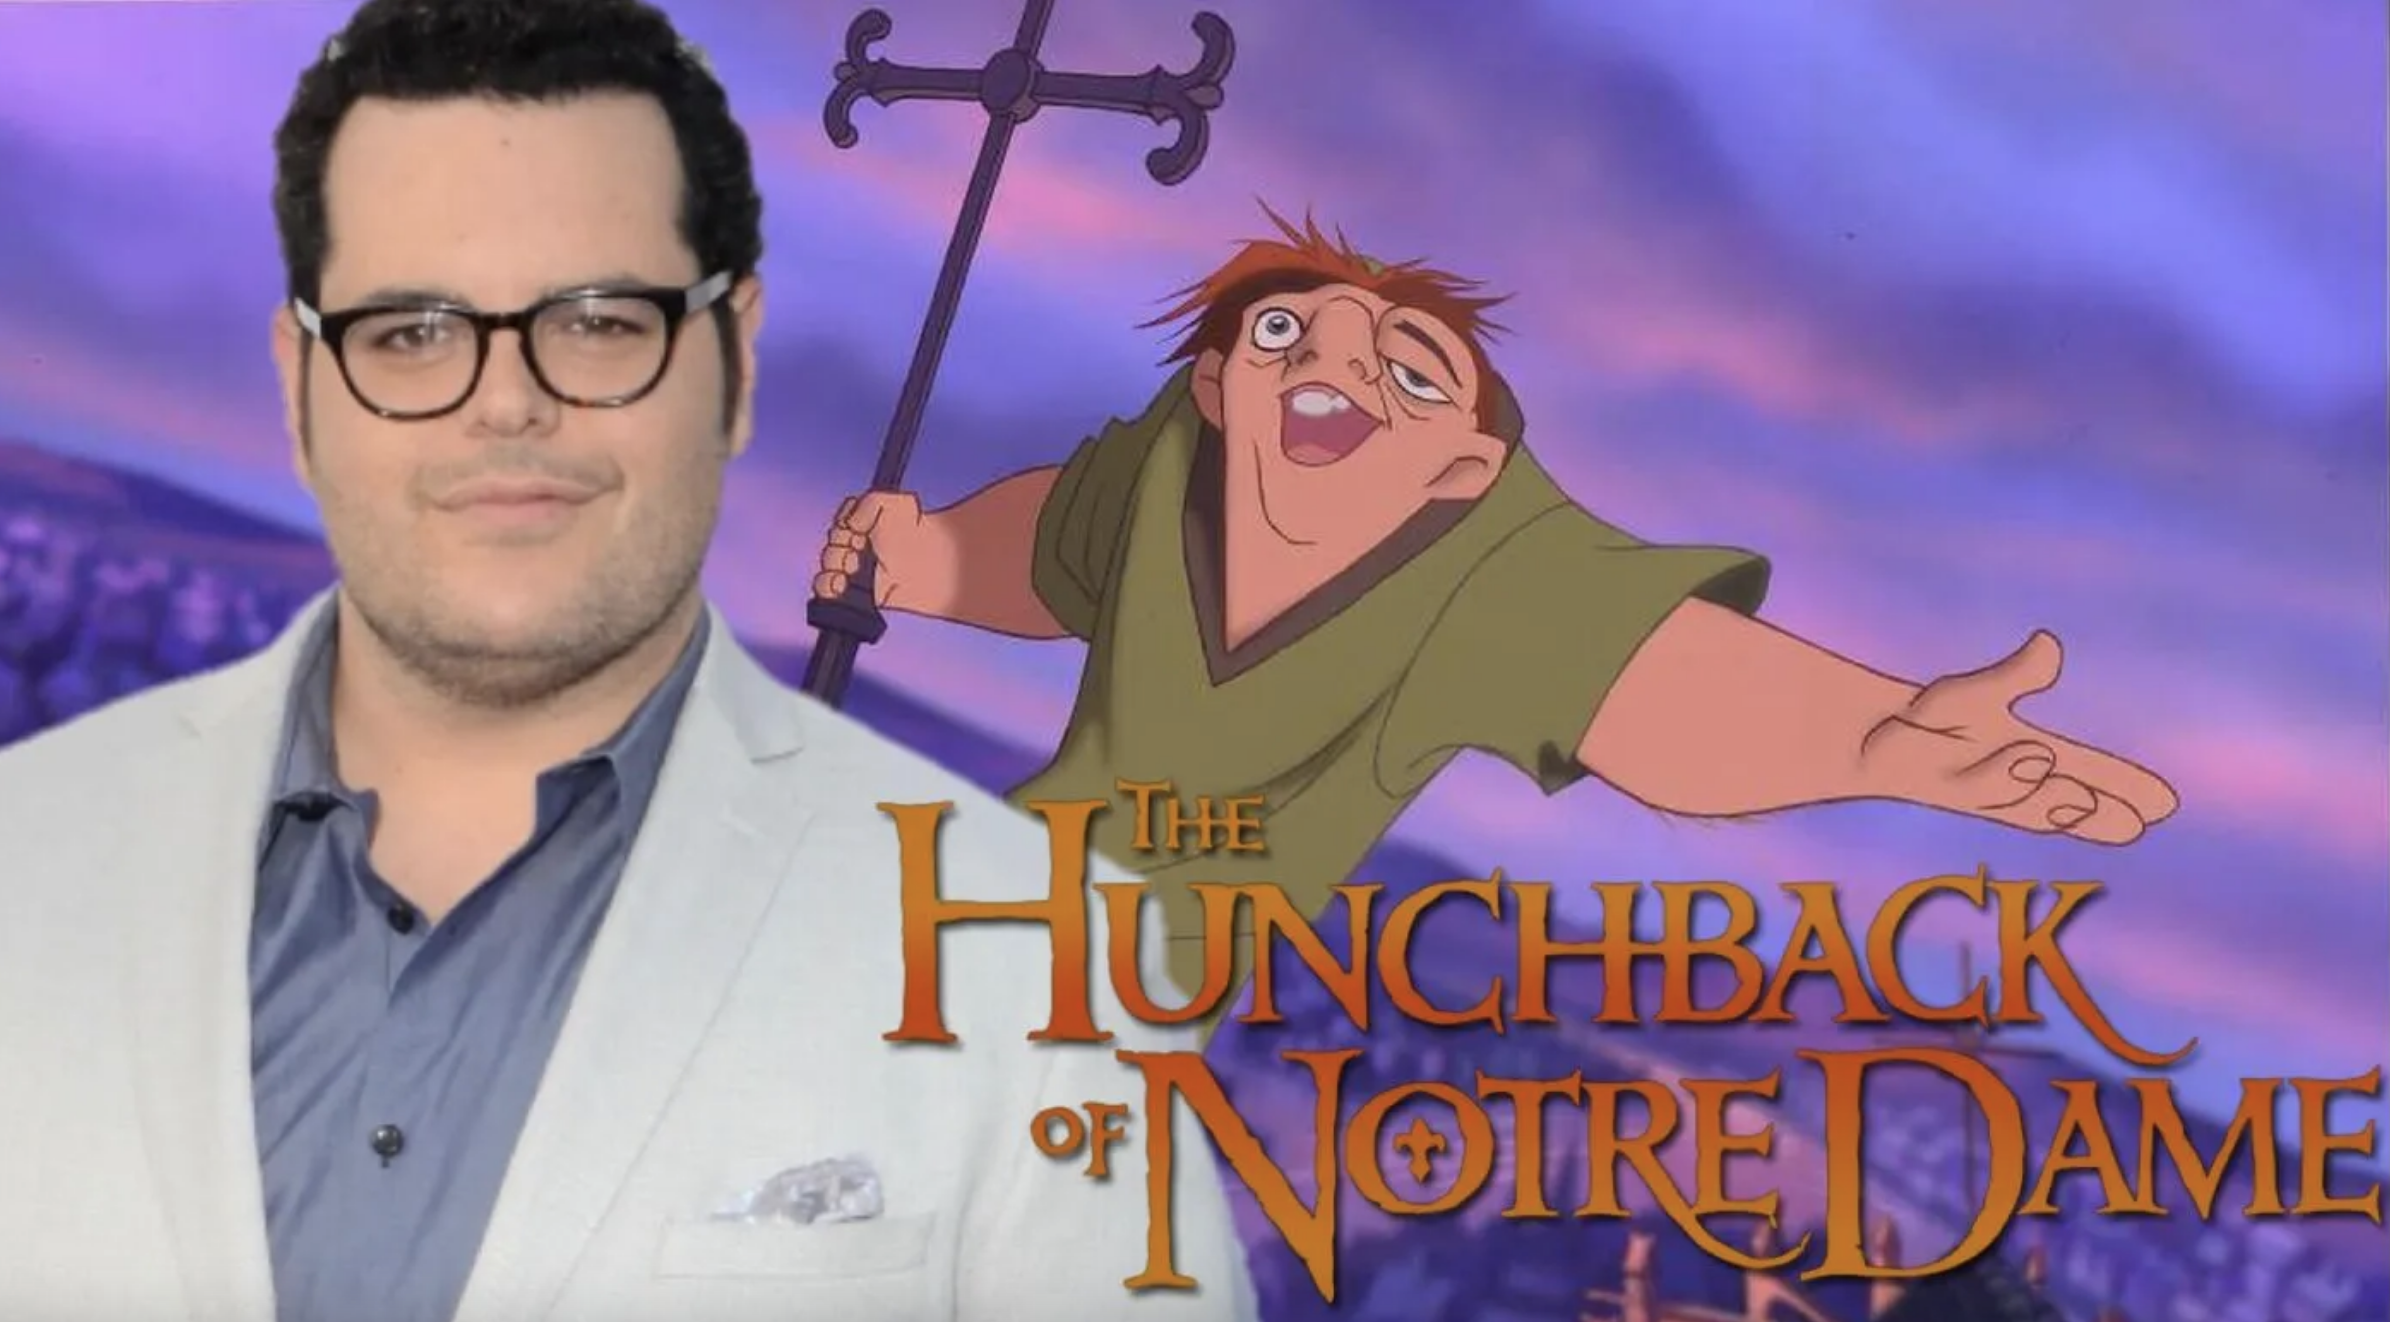 Josh Gad Teases A Finished Script For Disney’s Live-Action ‘Hunchback of Notre Dame’ Film